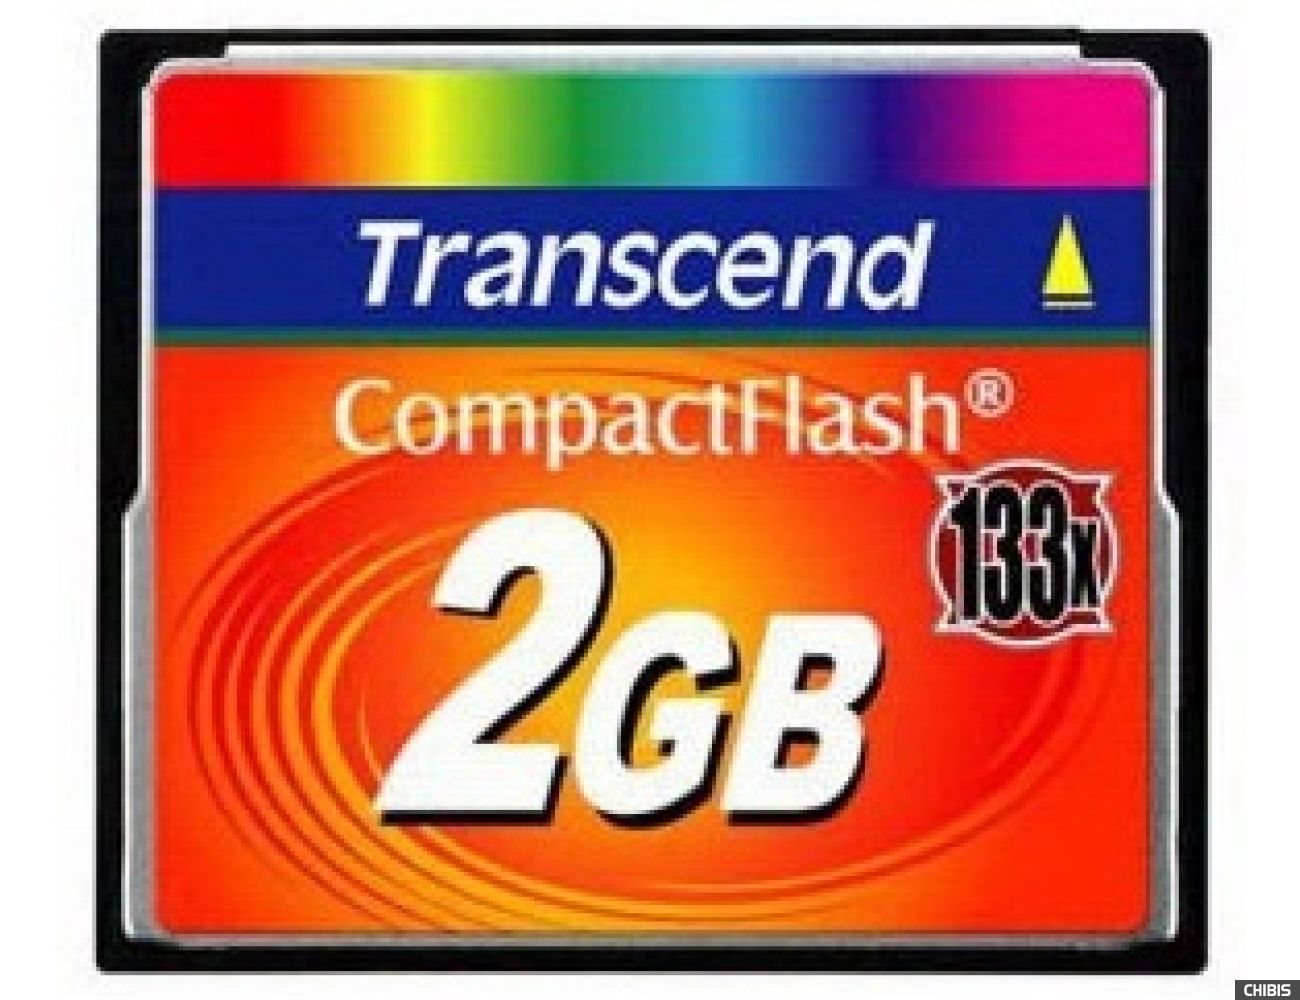 Карта памяти Transcend Compact Flash 133x 2Gb